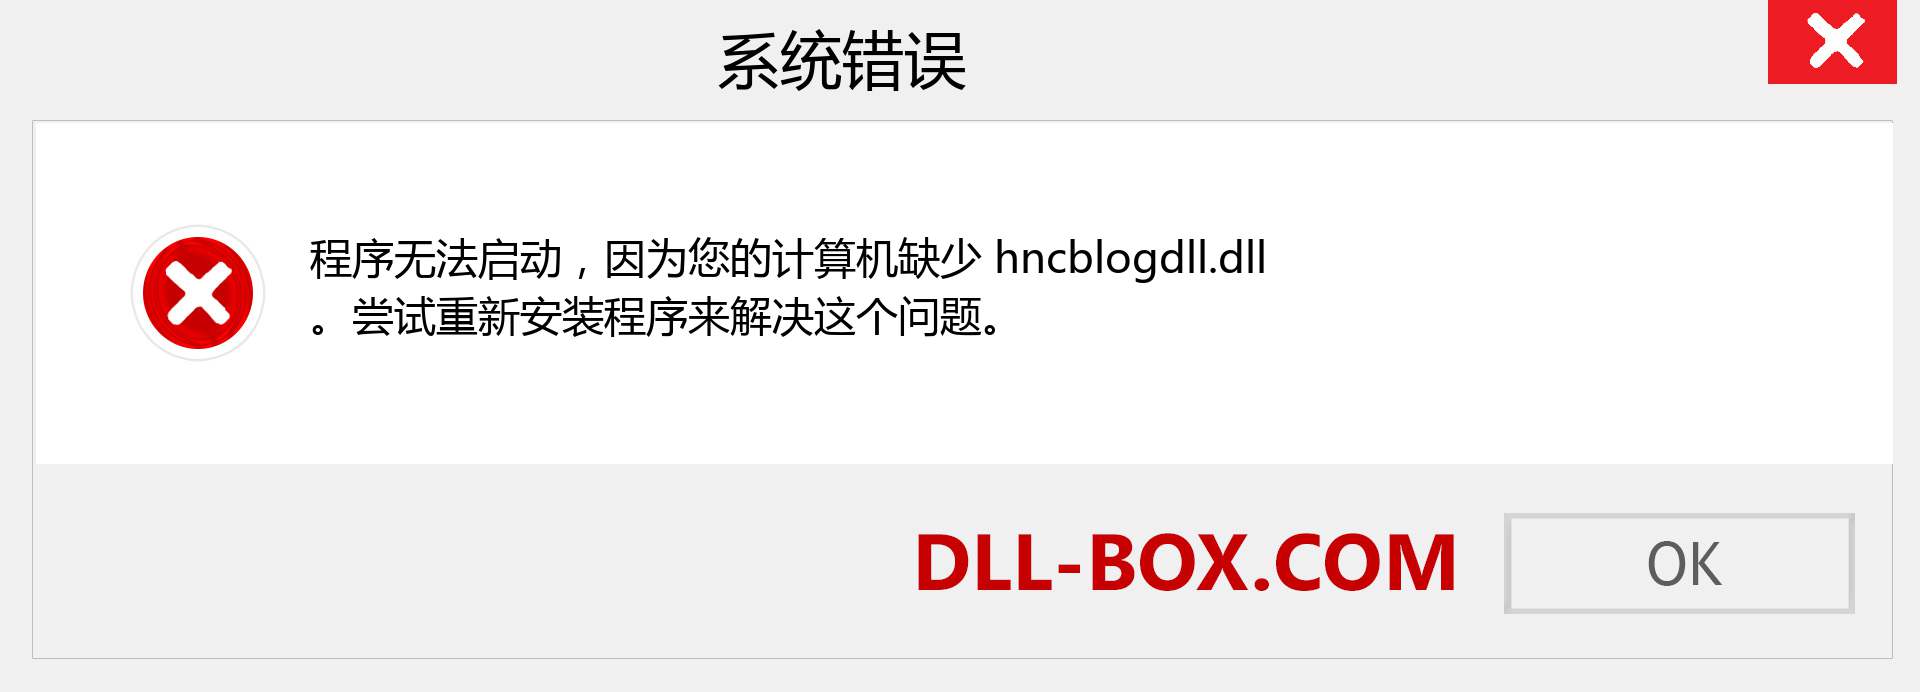 hncblogdll.dll 文件丢失？。 适用于 Windows 7、8、10 的下载 - 修复 Windows、照片、图像上的 hncblogdll dll 丢失错误